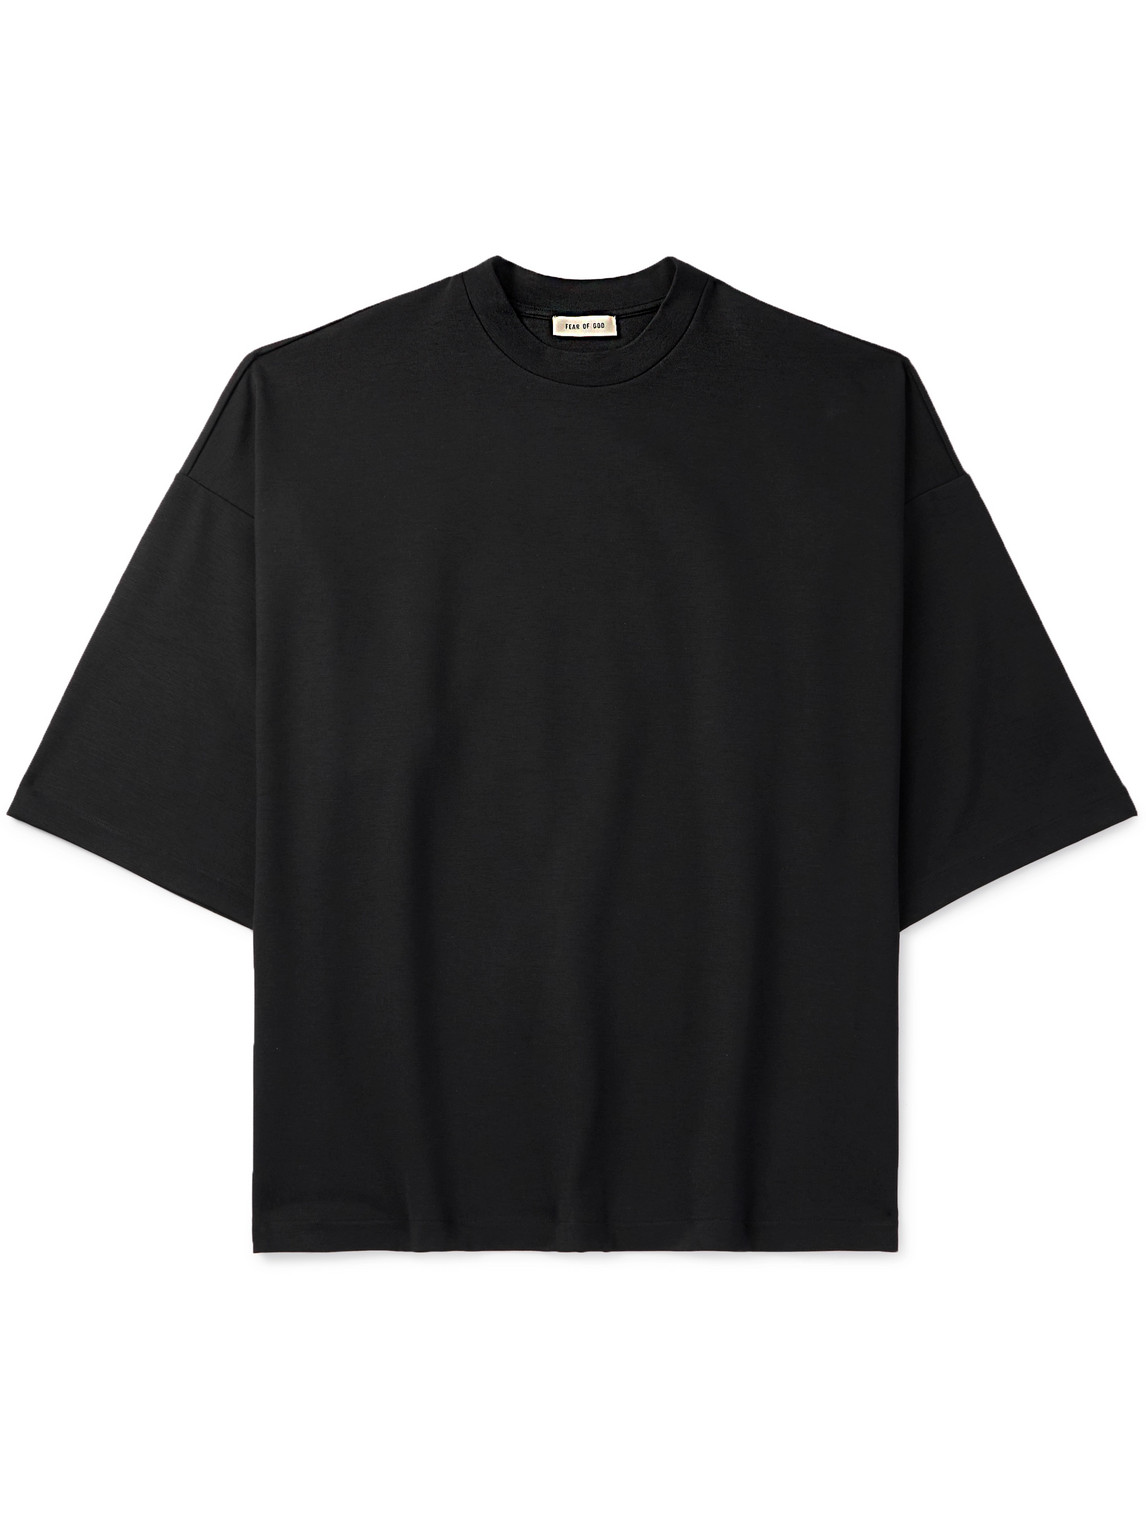 Fear of God - Thunderbird Milano Oversized Embroidered Jersey T-Shirt - Men - Black - XXL von Fear of God